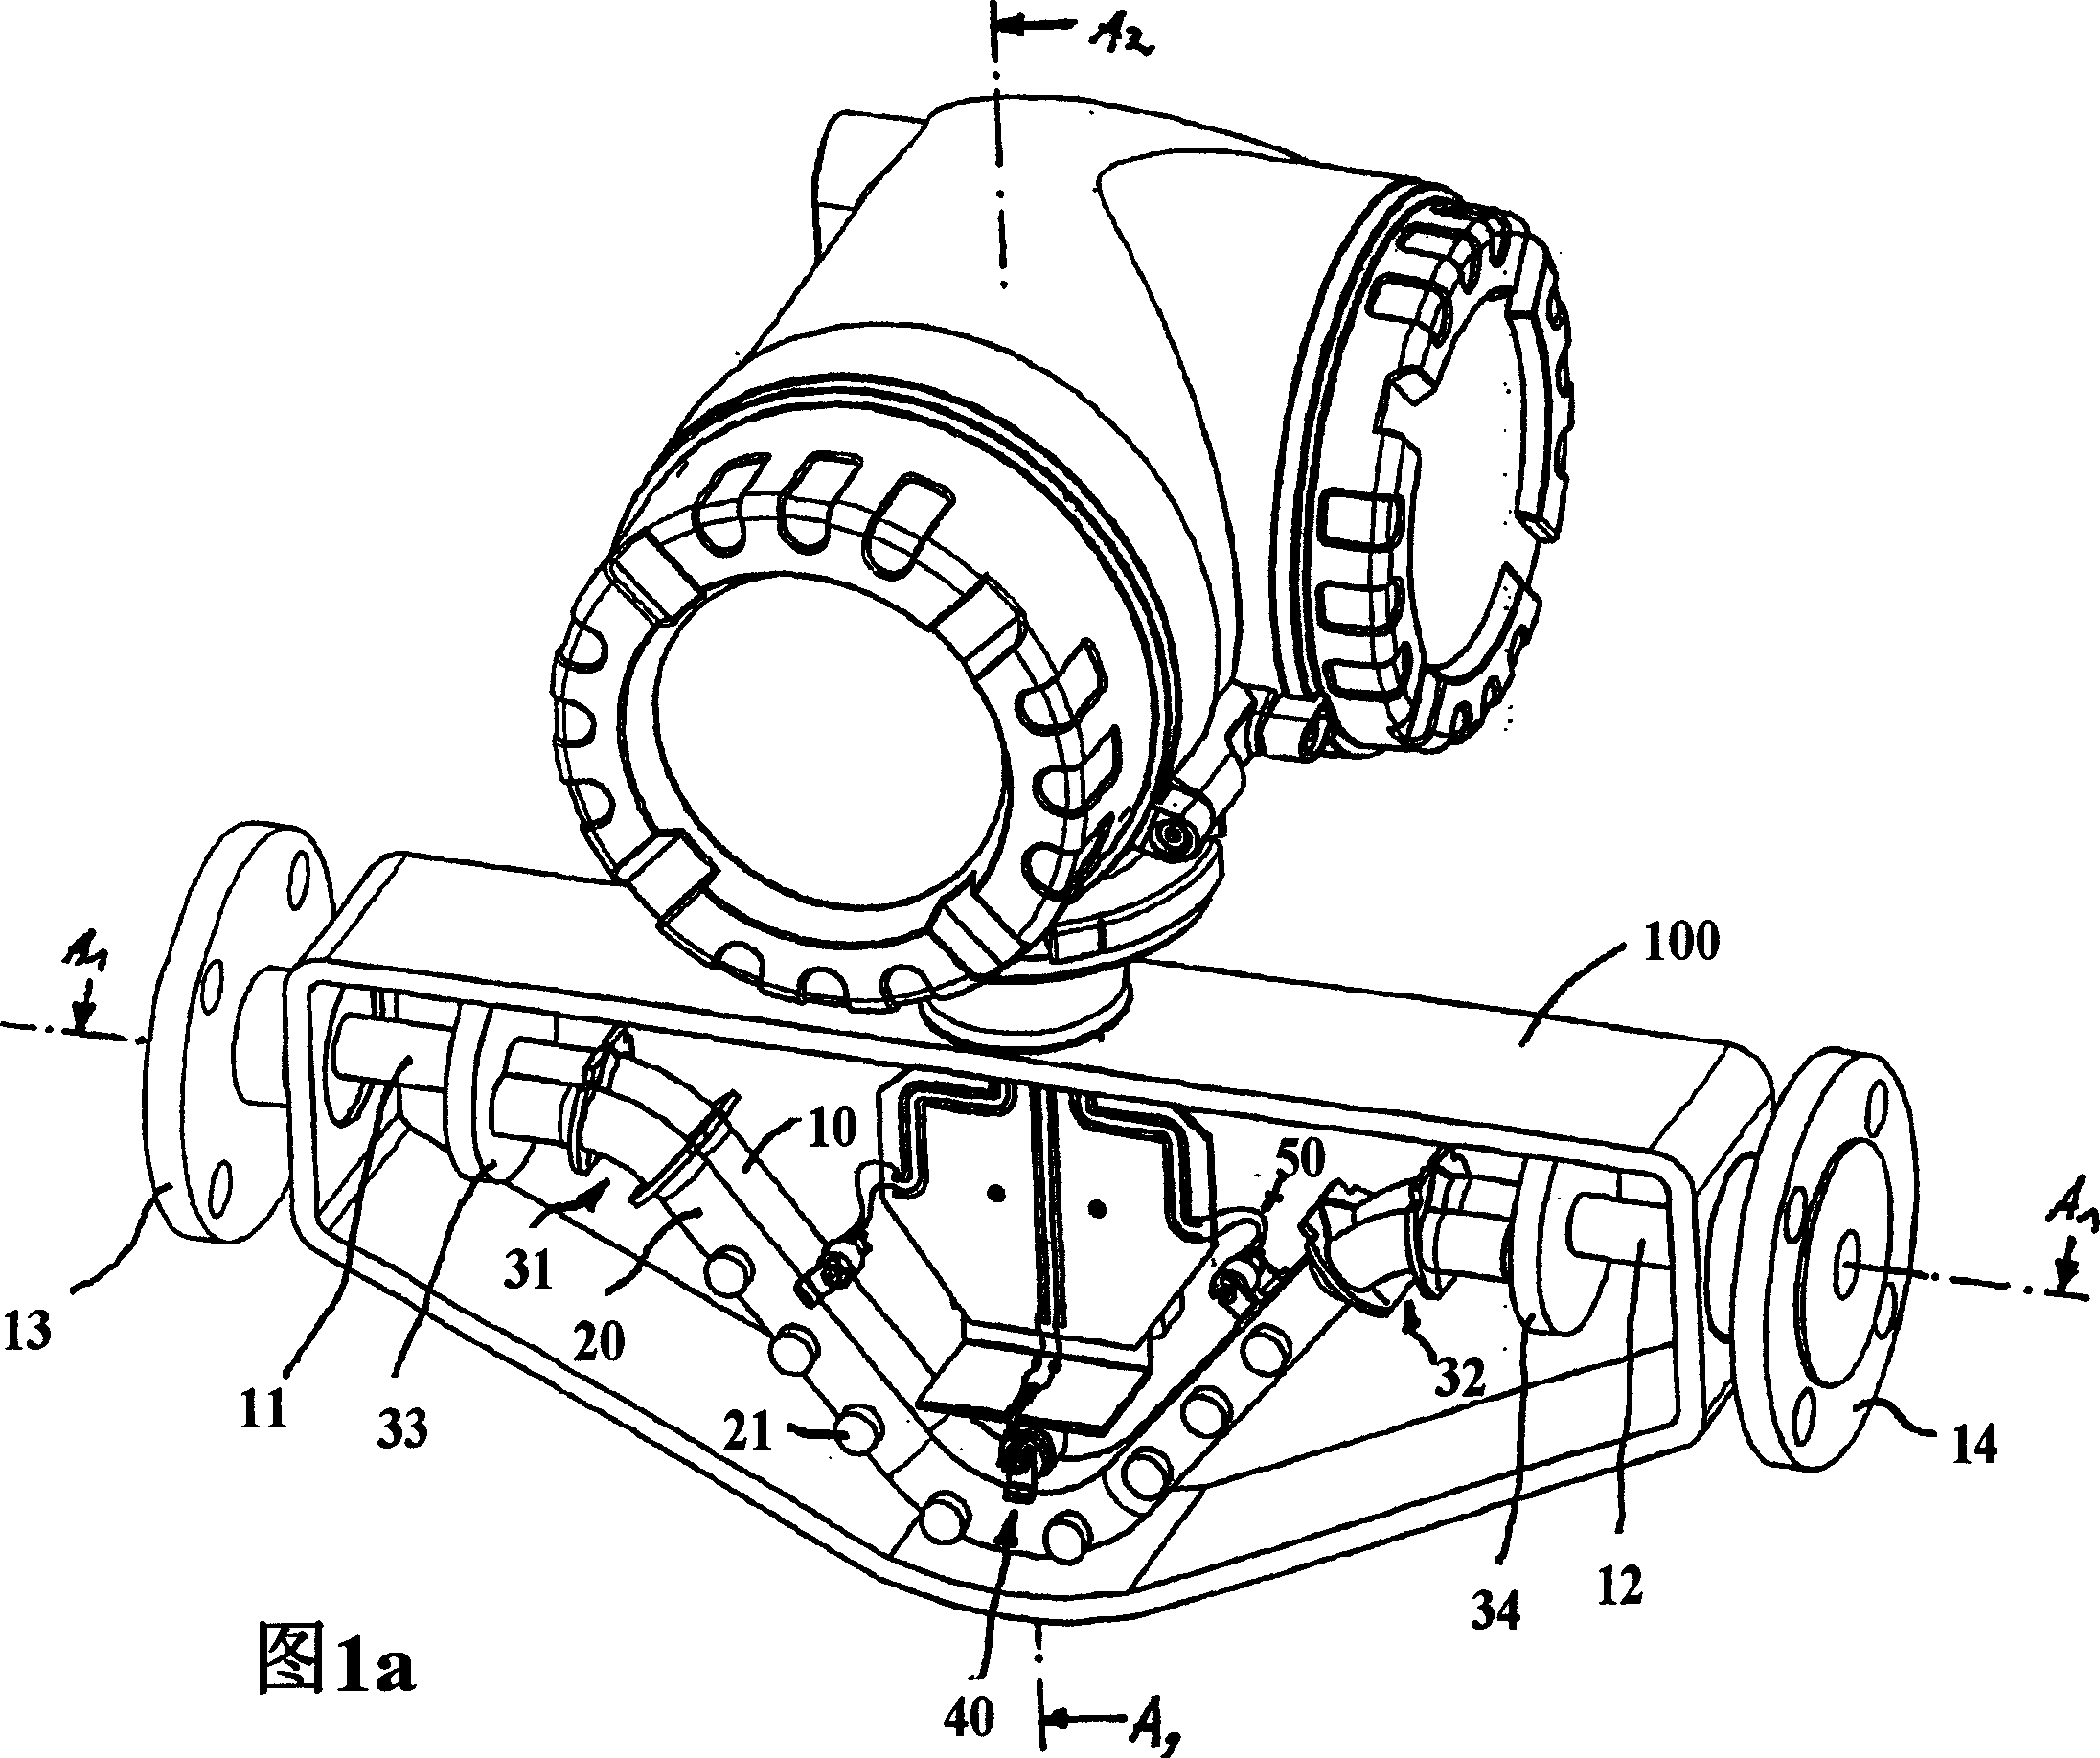 Transducer of the vibration type